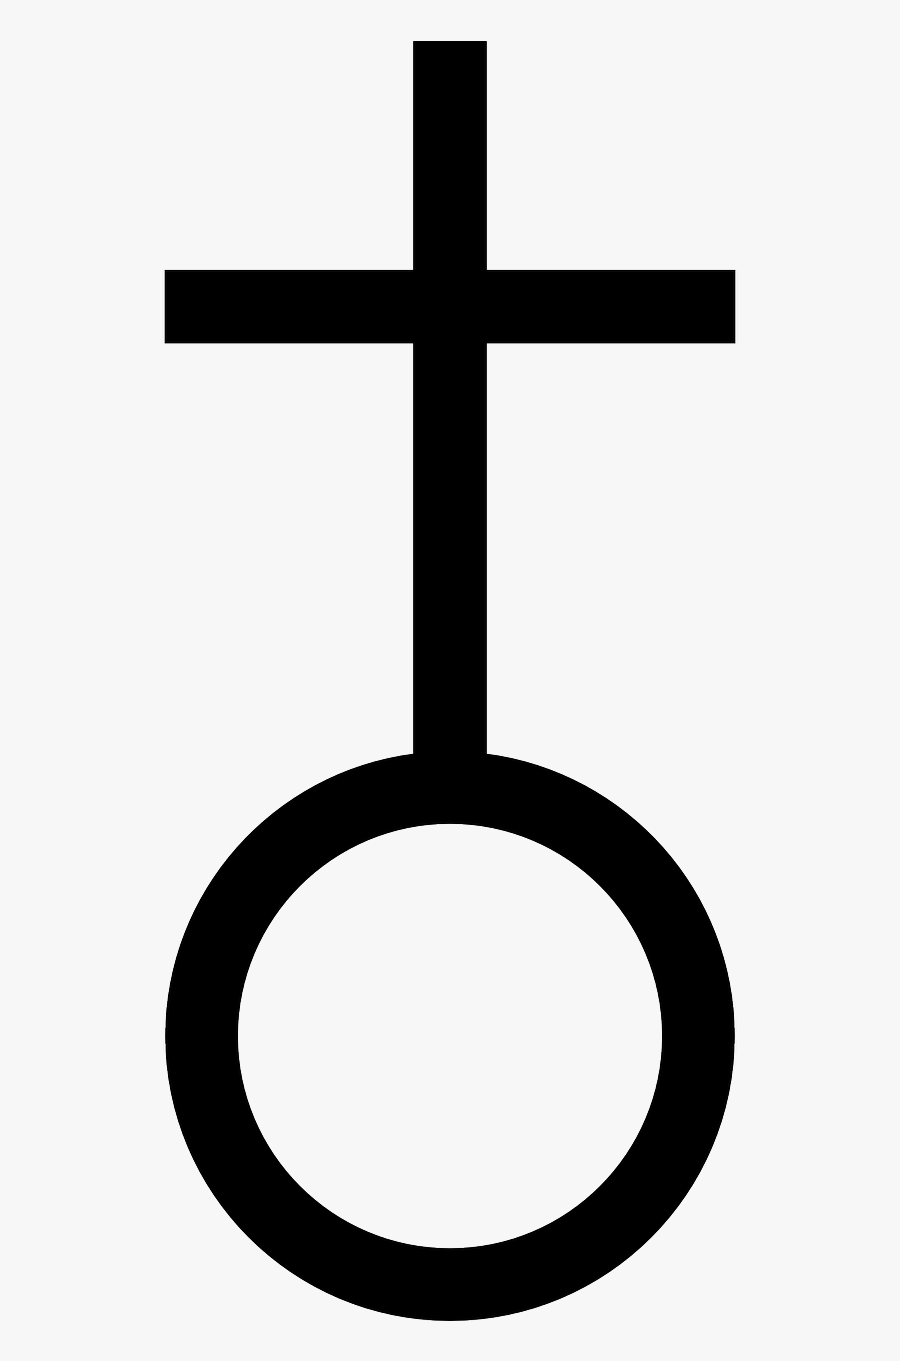 Map Symbol For A Church Svg Clip Arts - Cross, Transparent Clipart